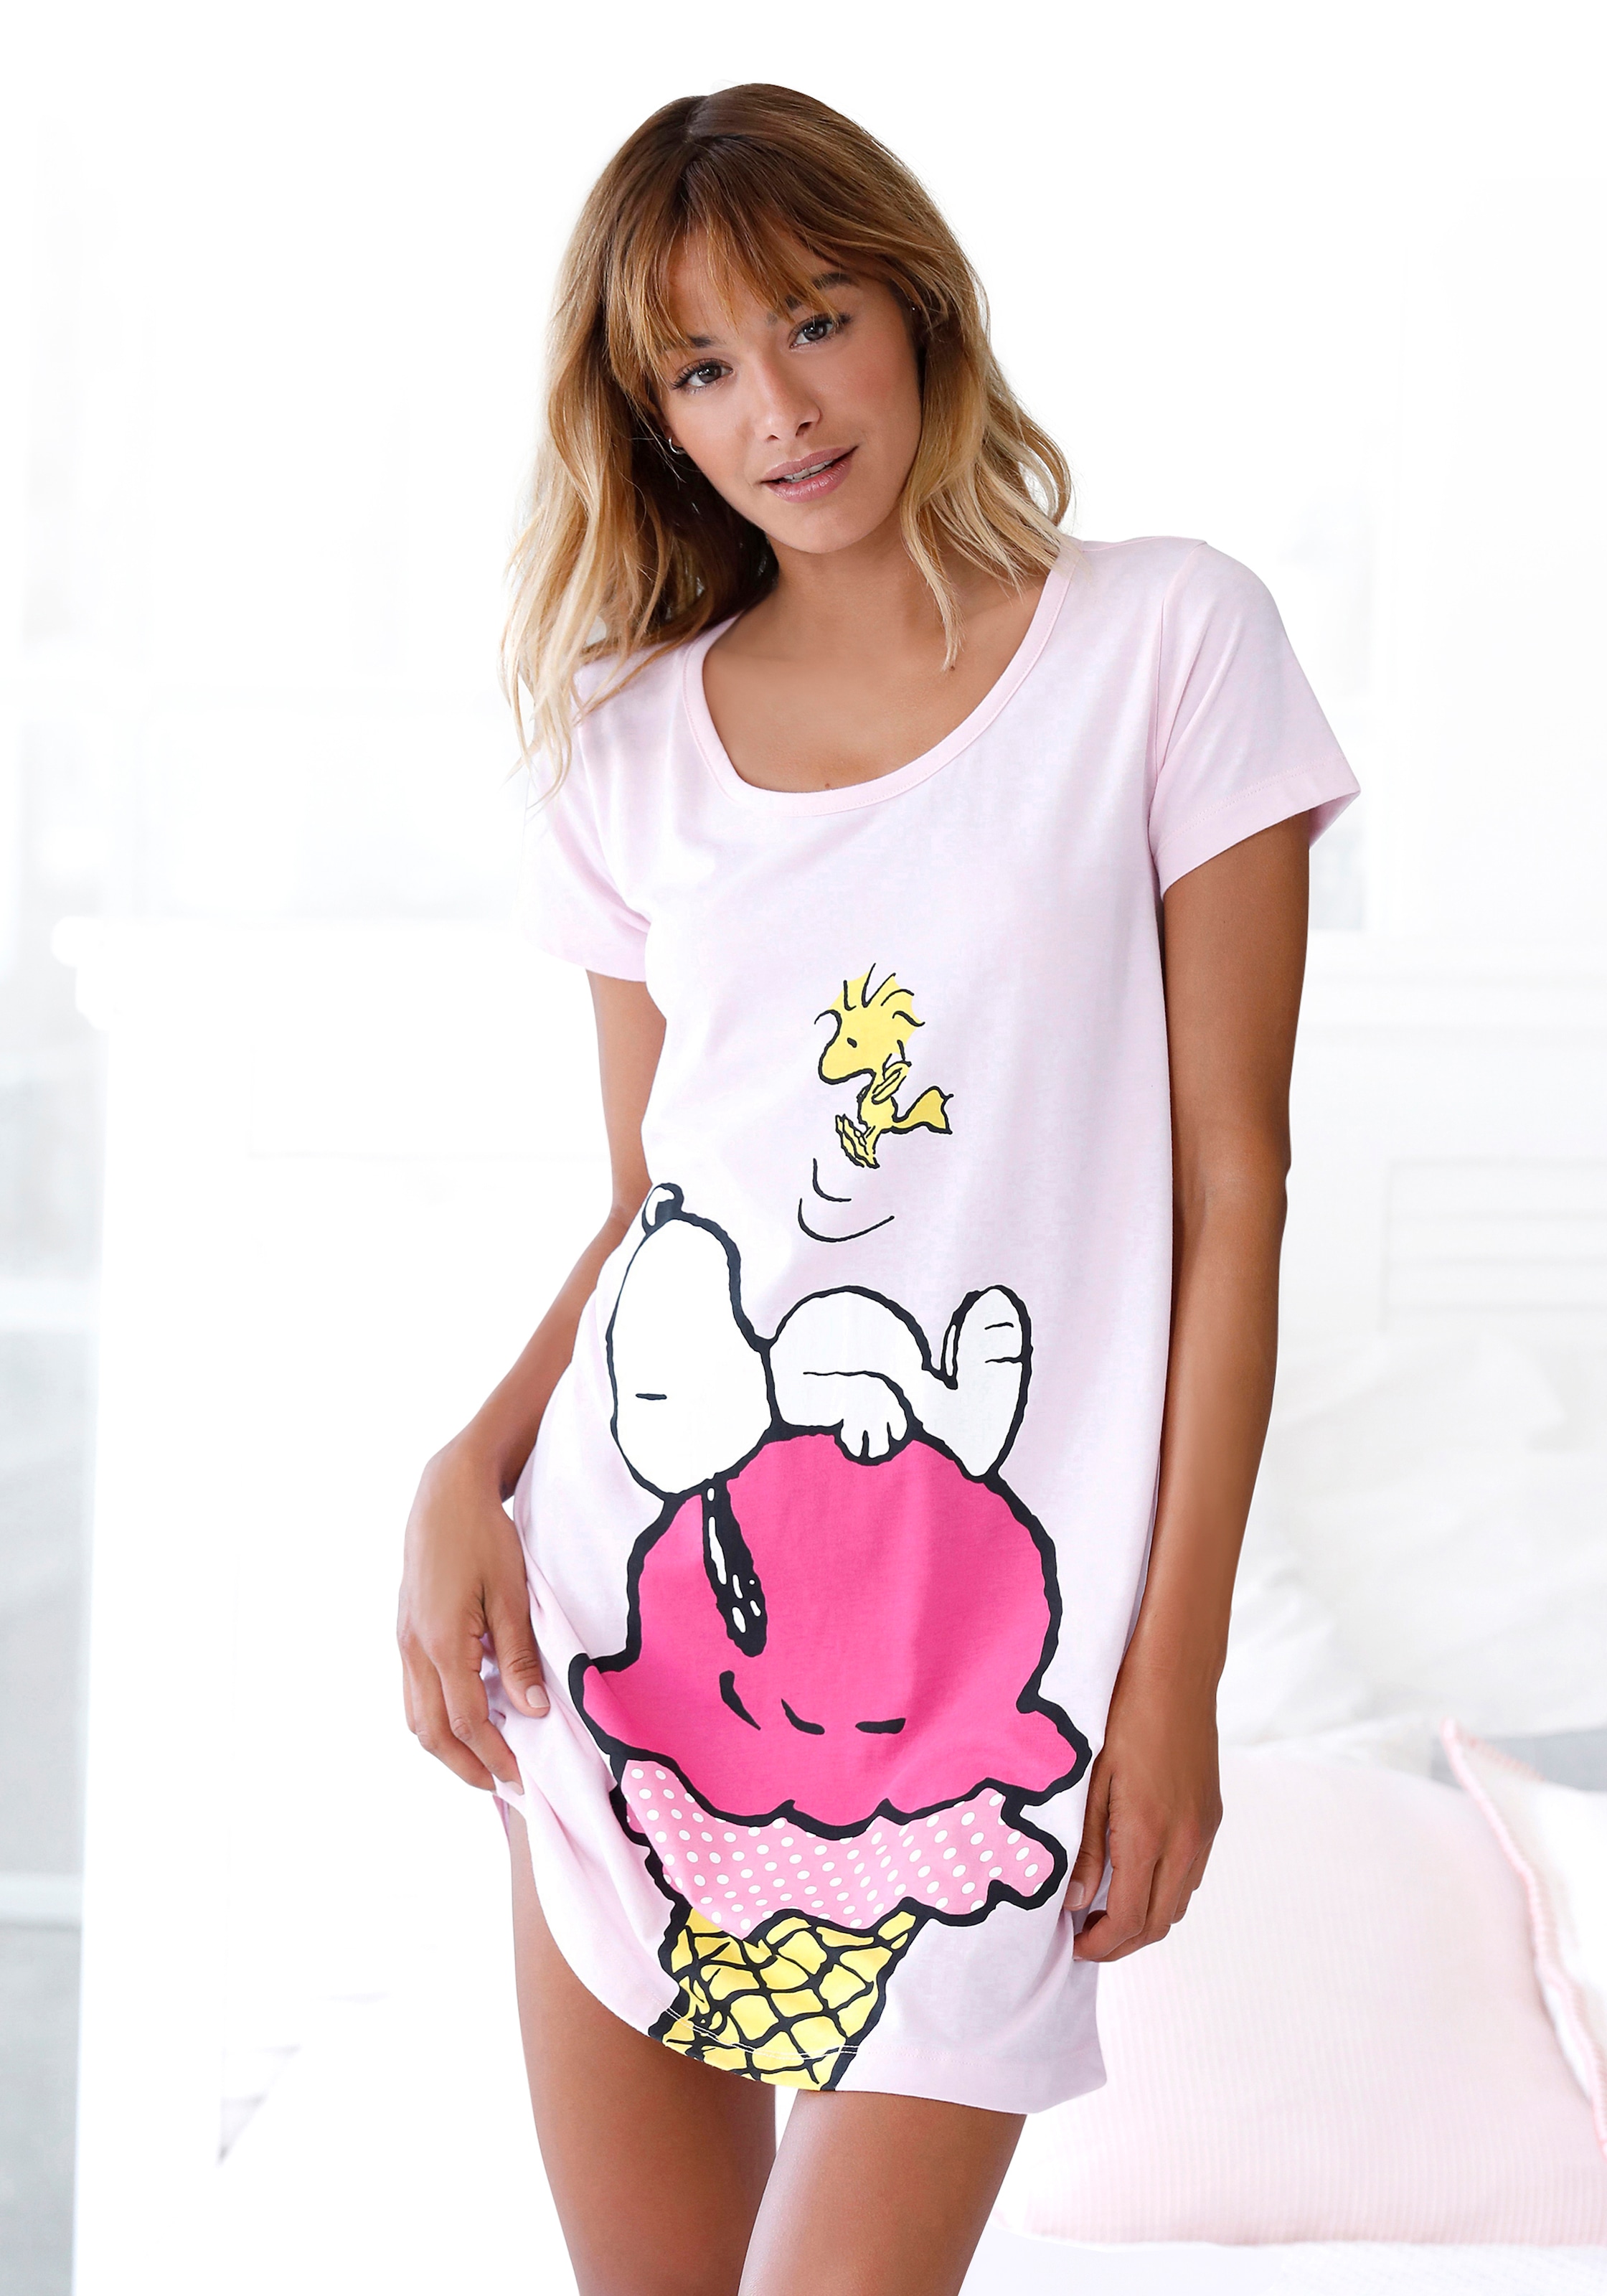 Sleepshirt, mit großem Snoopy-Motiv